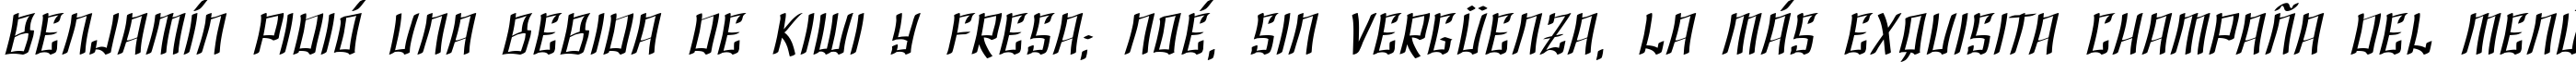 Пример написания шрифтом SF Shai Fontai Extended Oblique текста на испанском